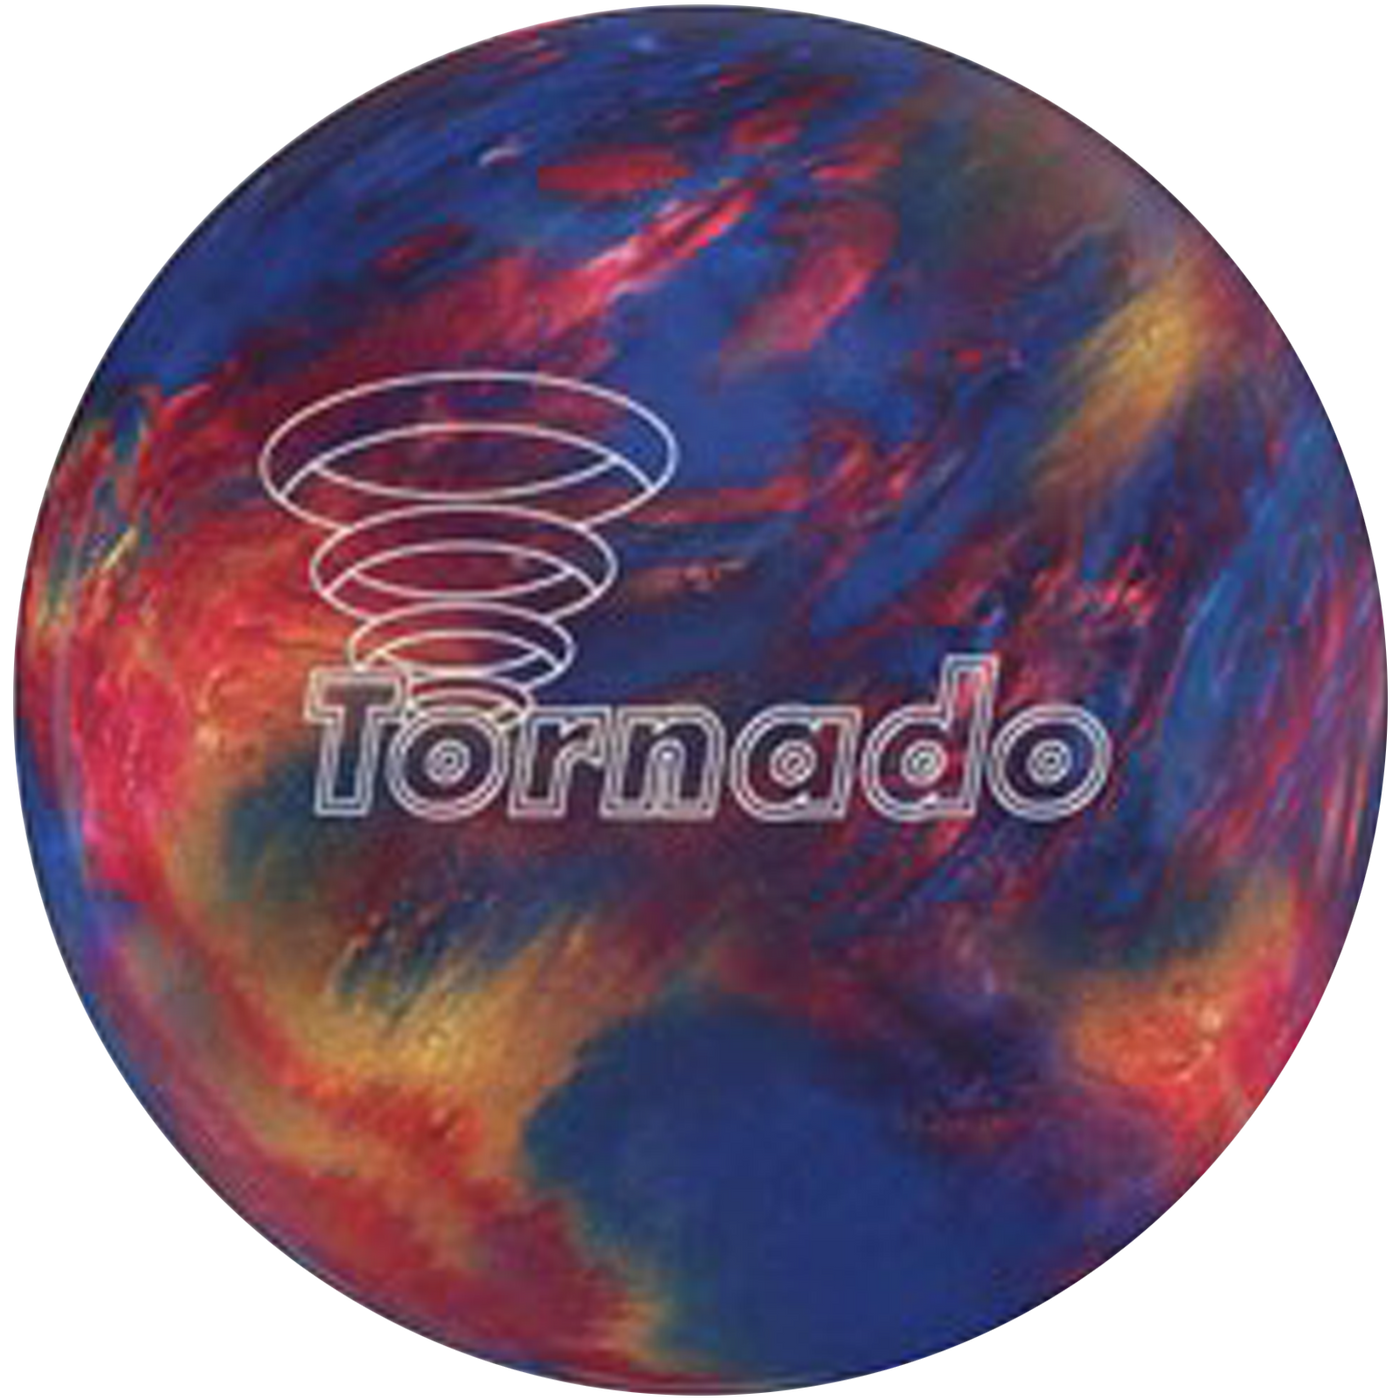 Tornado Navy/Gold/Red Bowling Ball